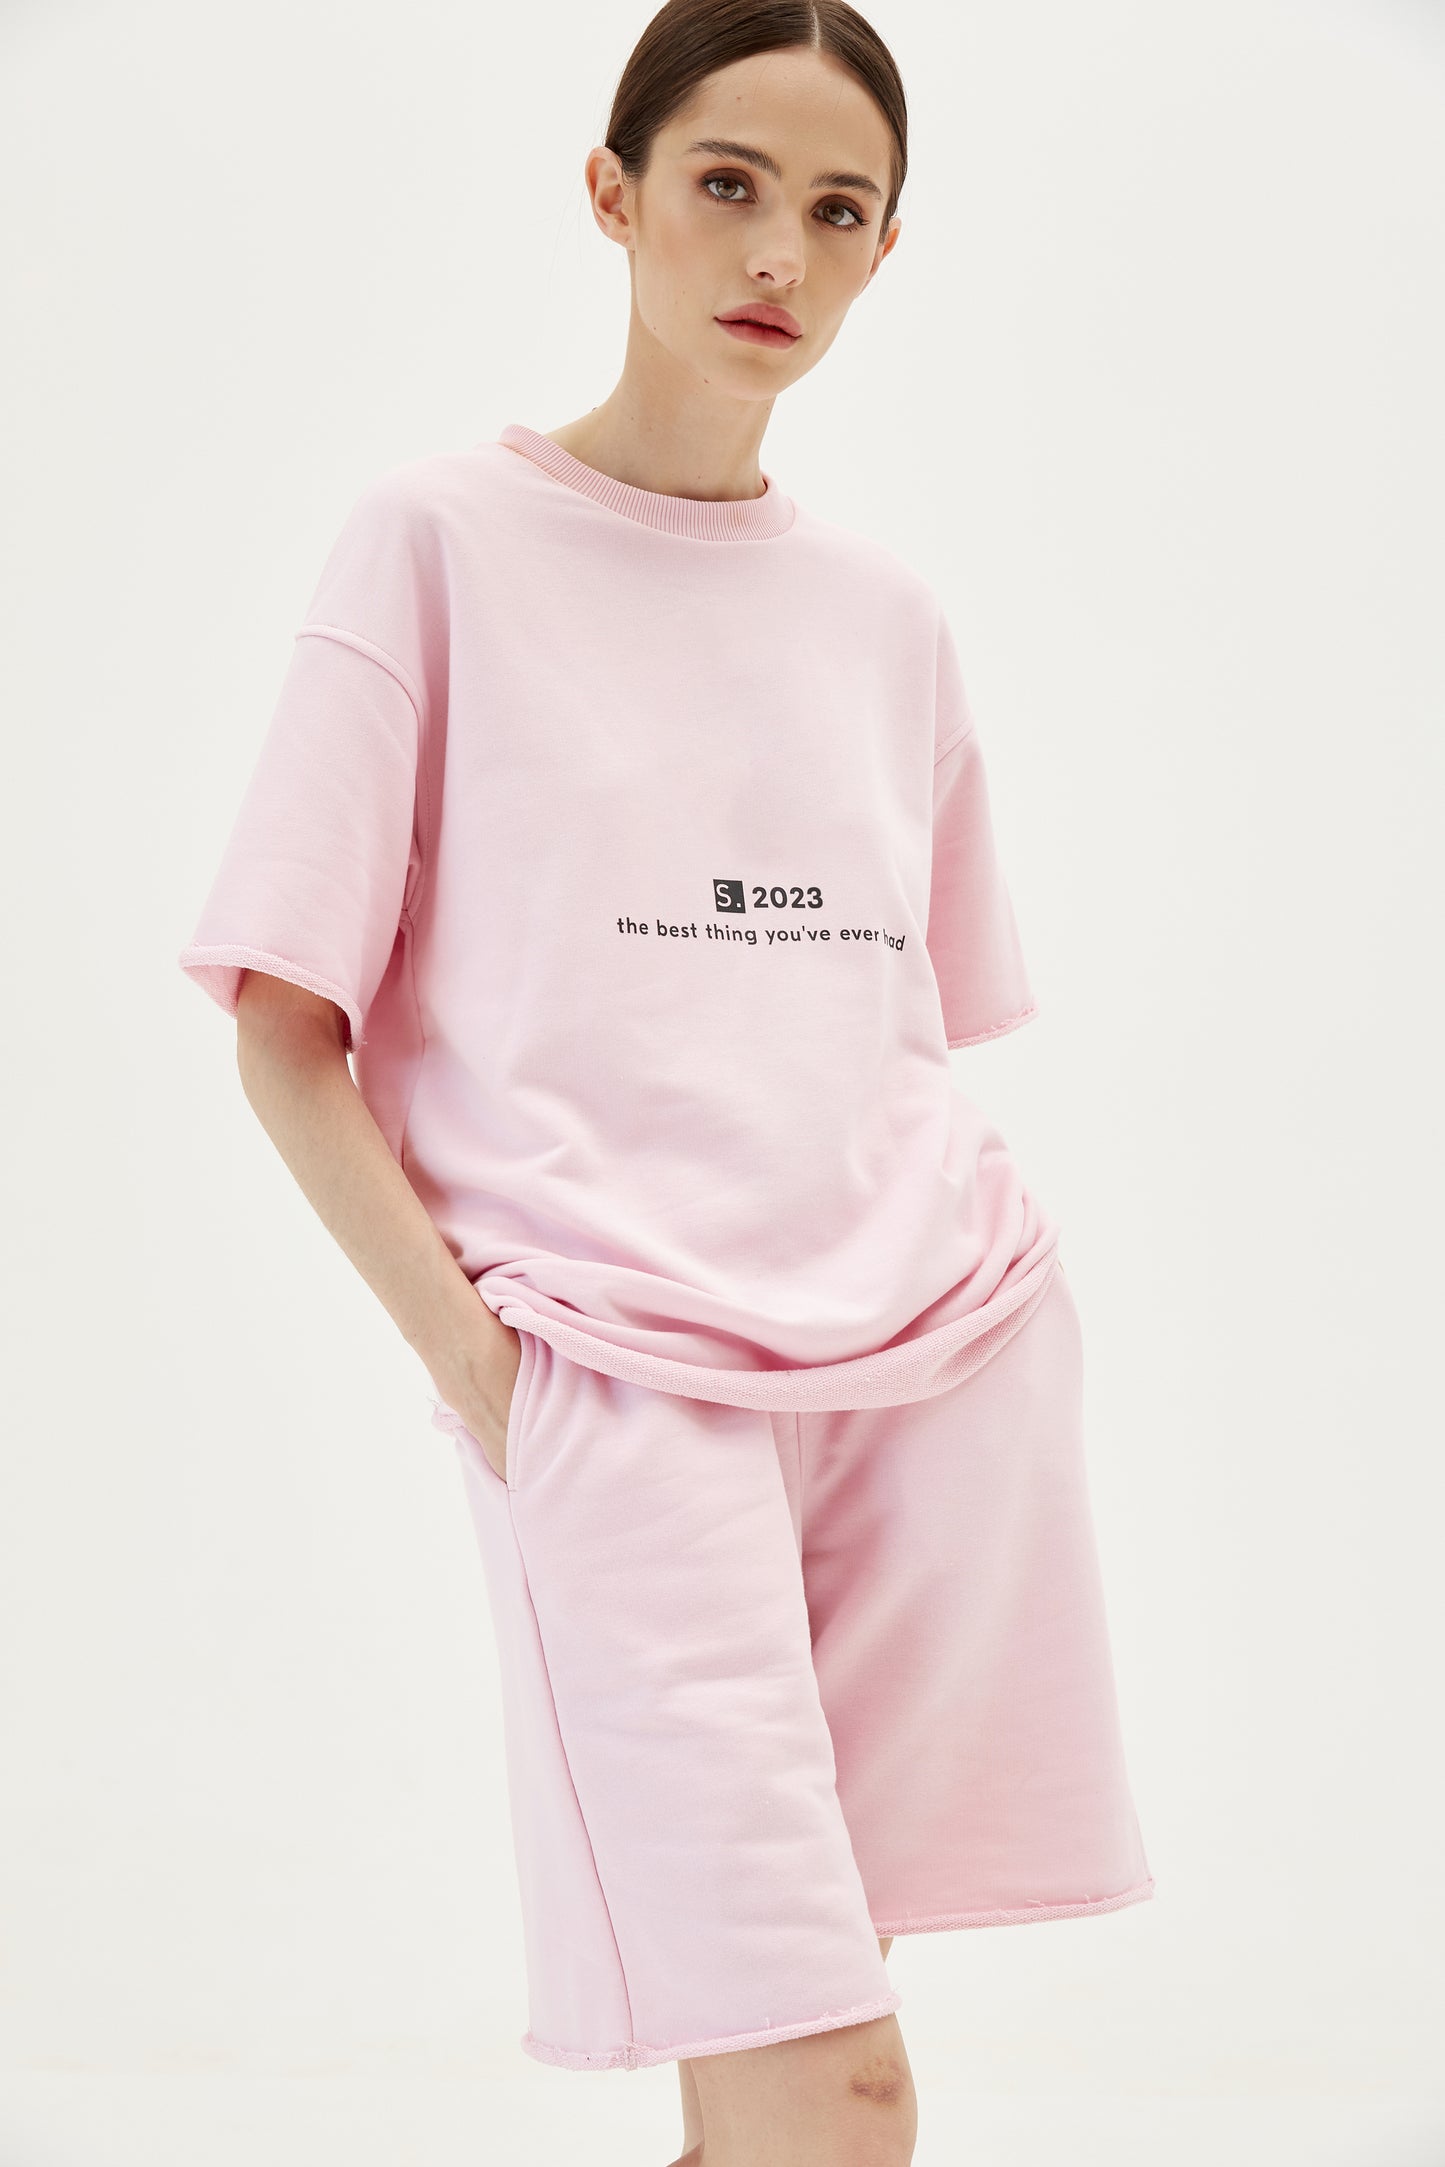 T-Shirt Personality Pink